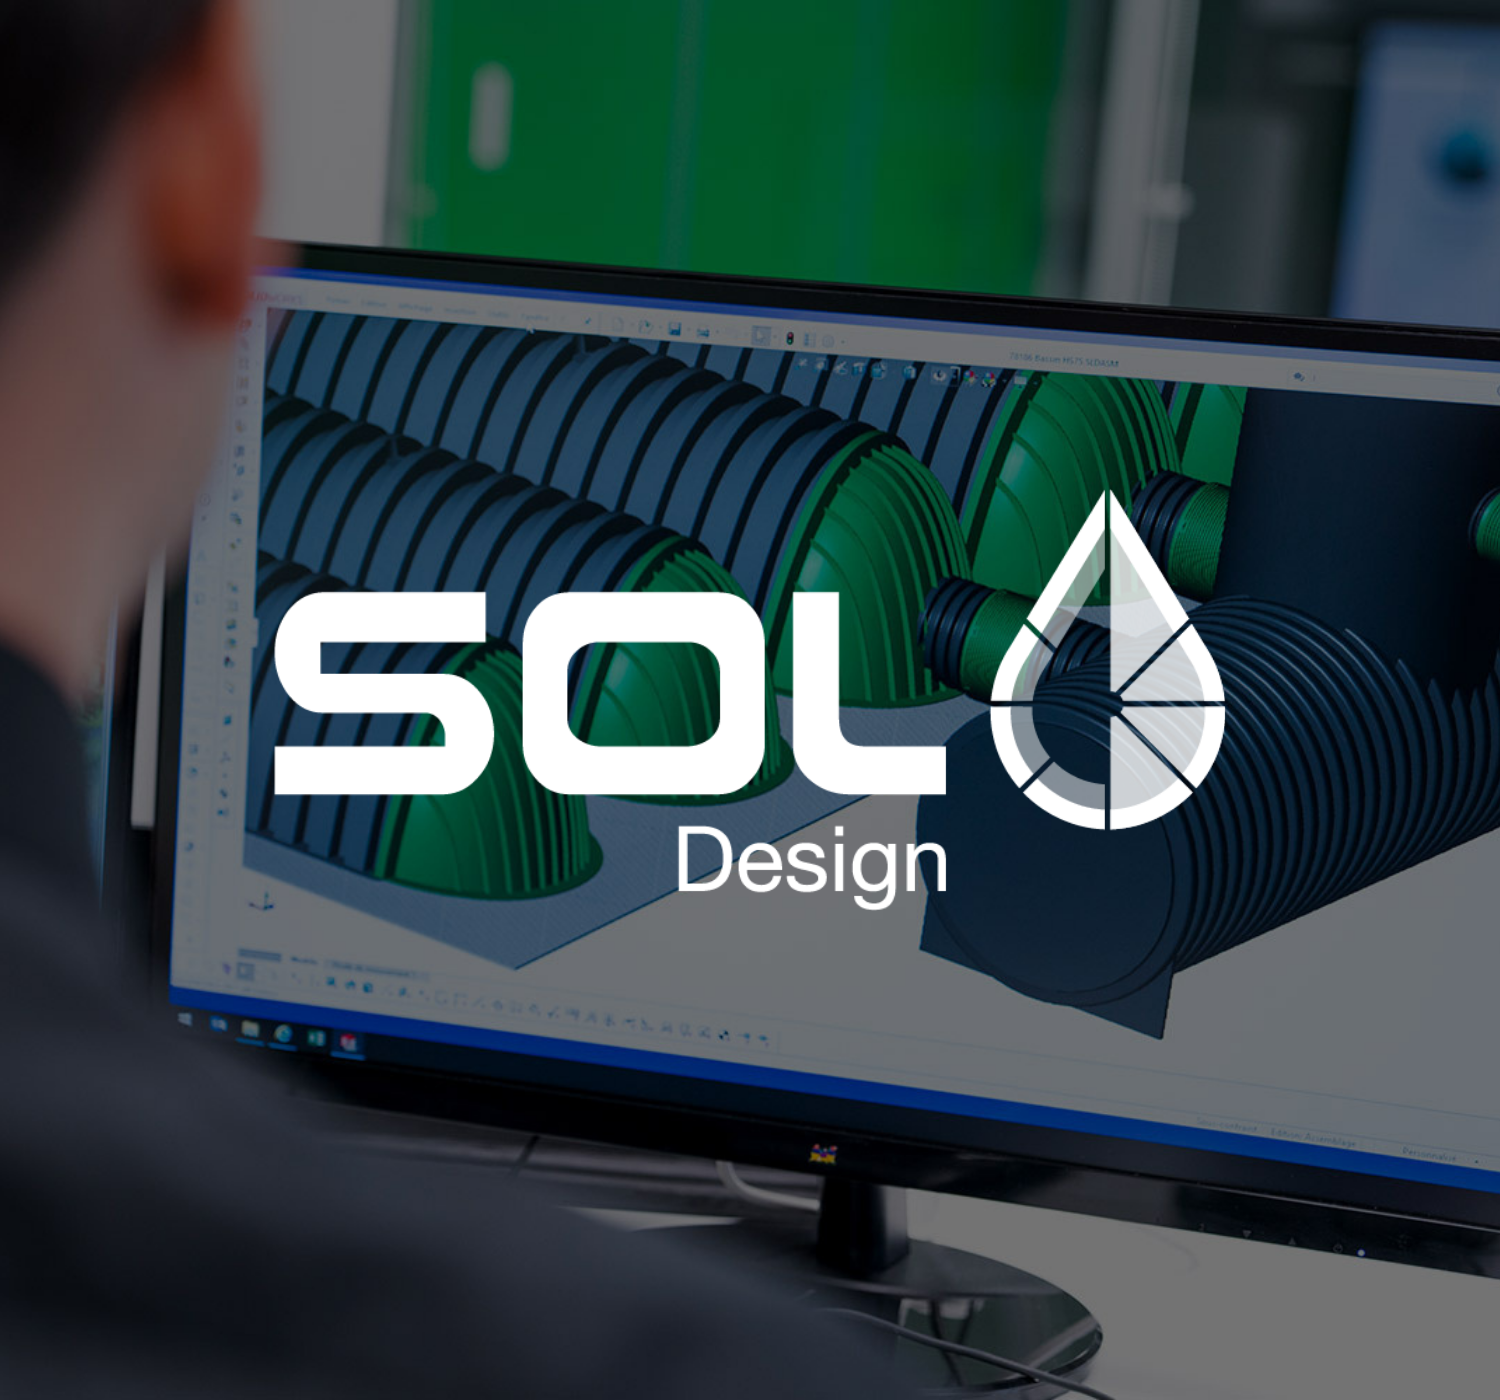 Sol’O Design : un nouvel outil de conception signé Soleno !